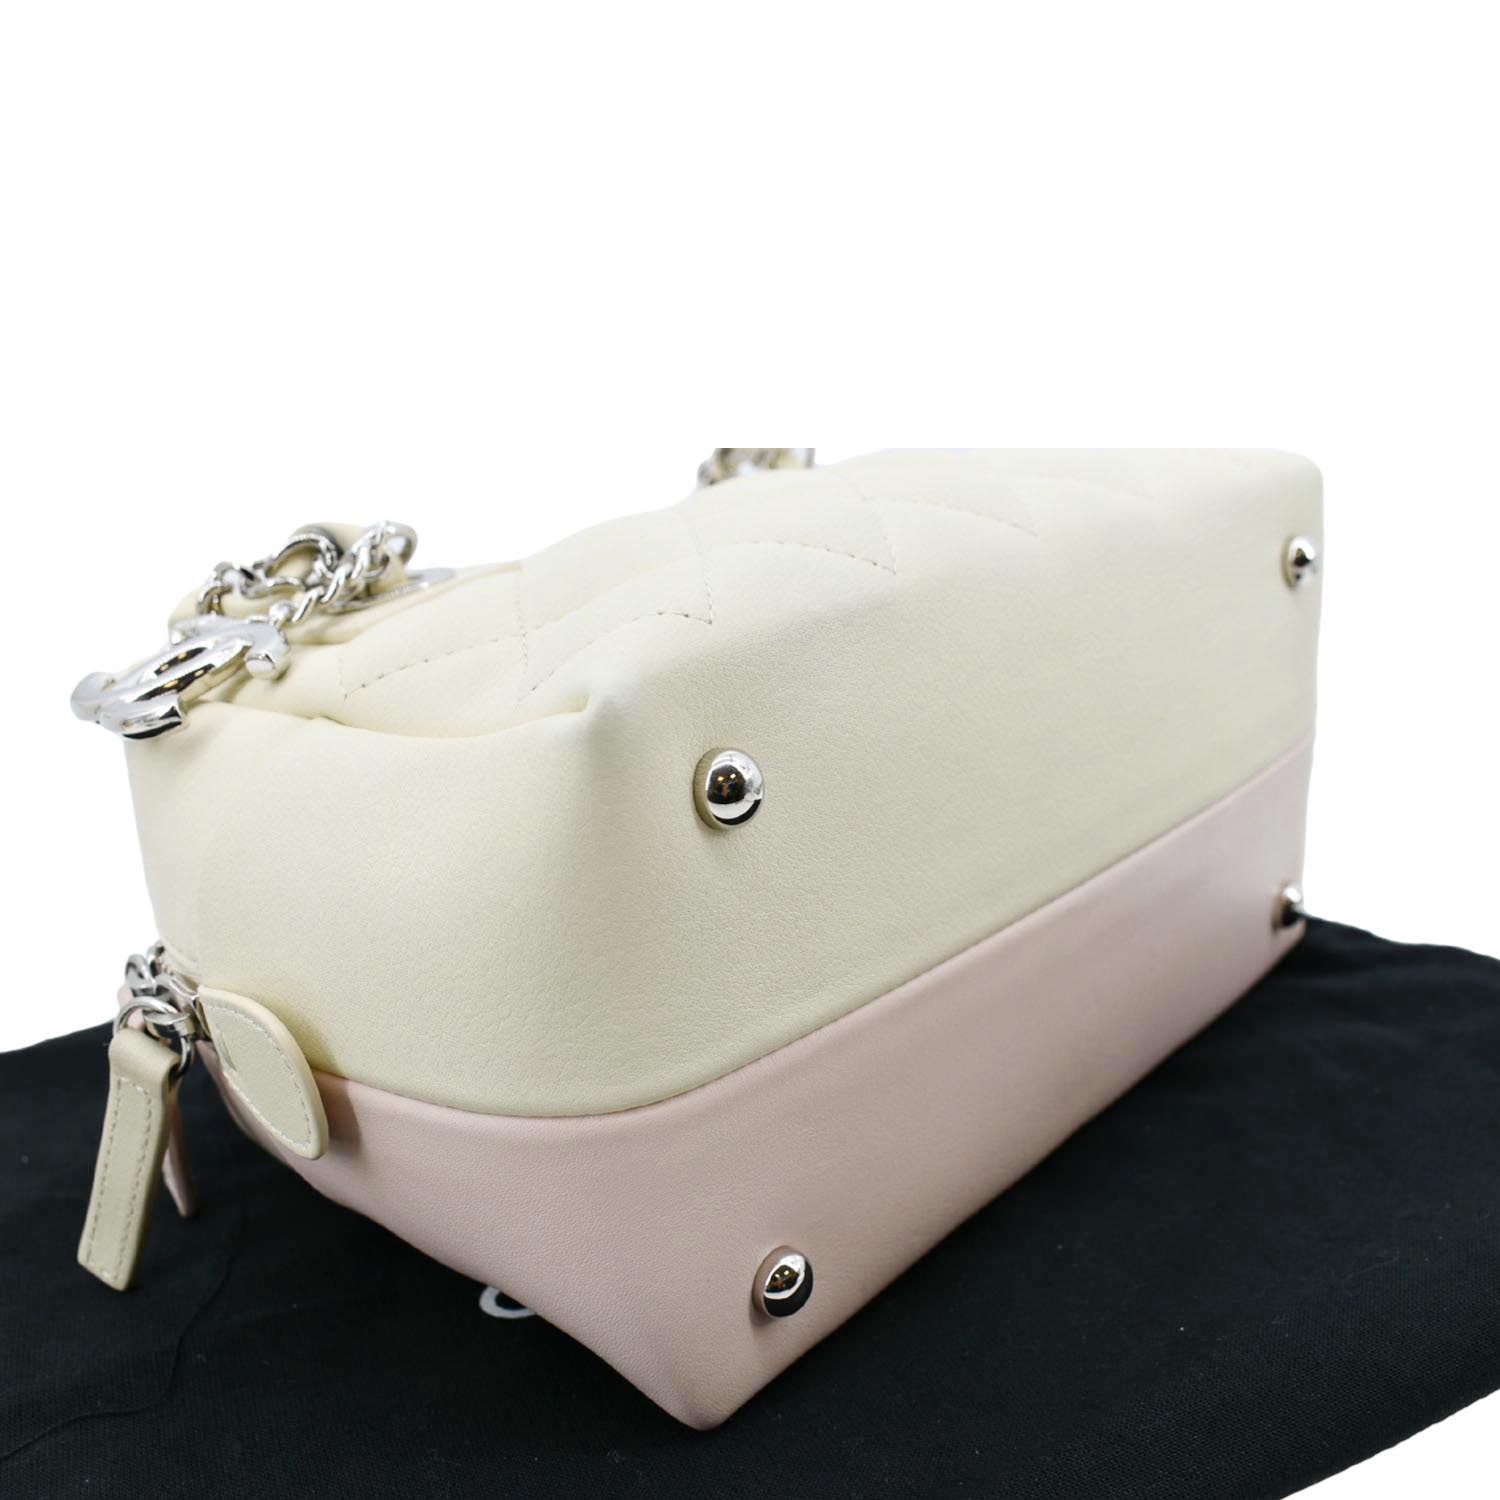 Chanel New White La Pausa Beach Bag - Vintage Lux